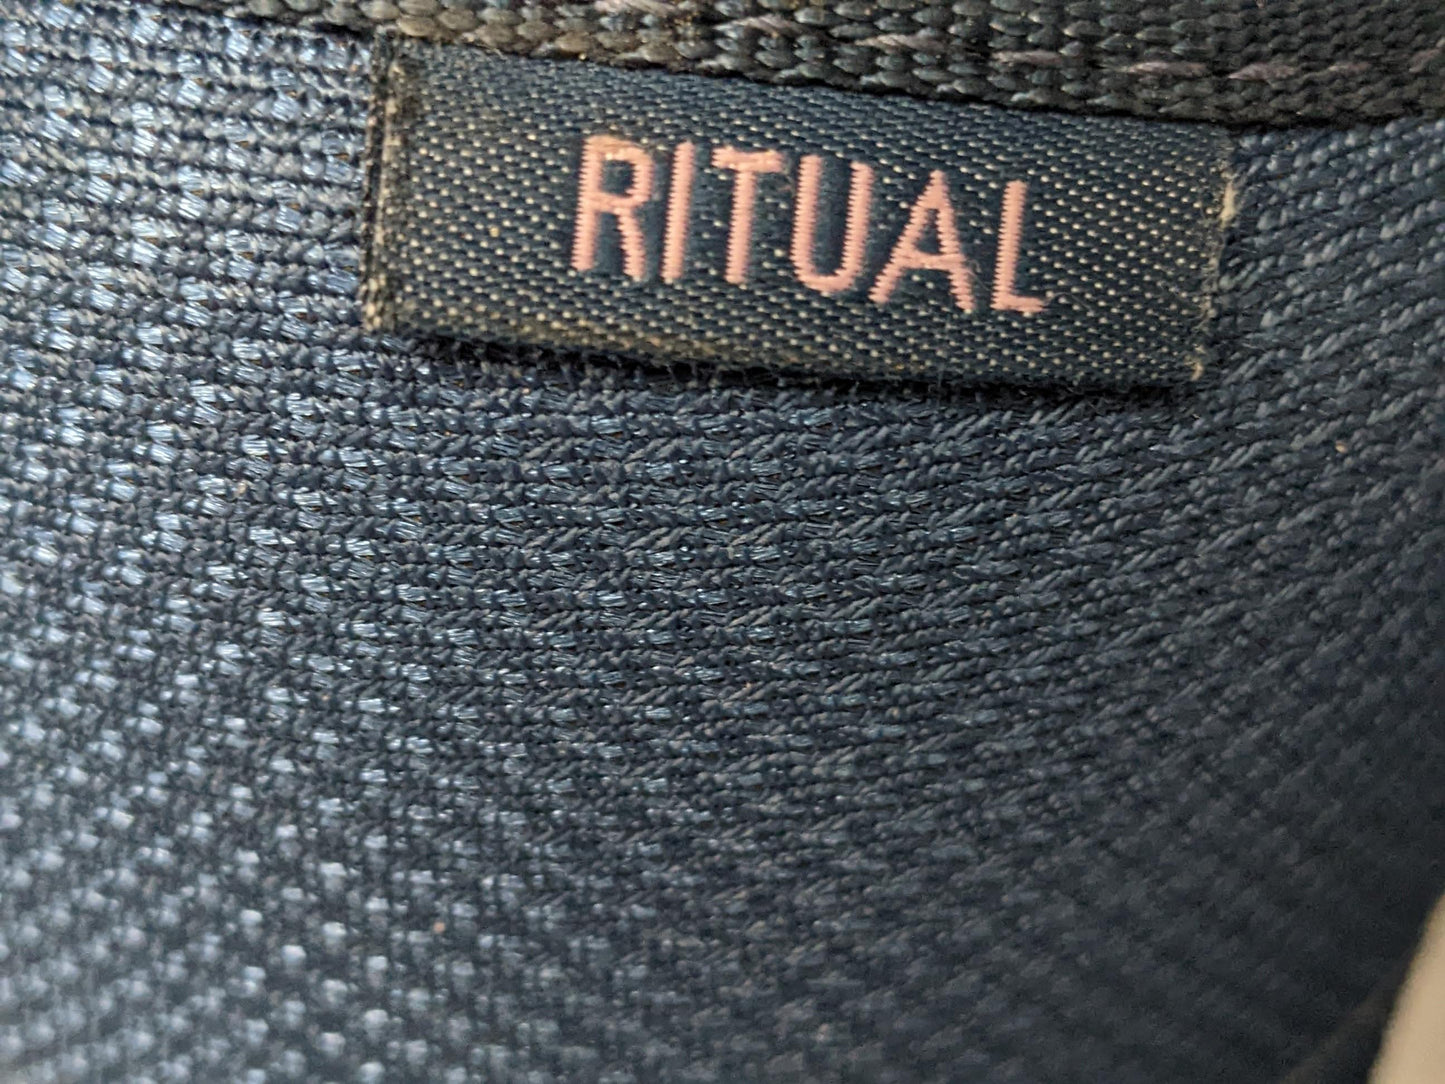 Burton Ritual Women's Snowboard Boots Size Women's 6.5 Color Gray Condition Used